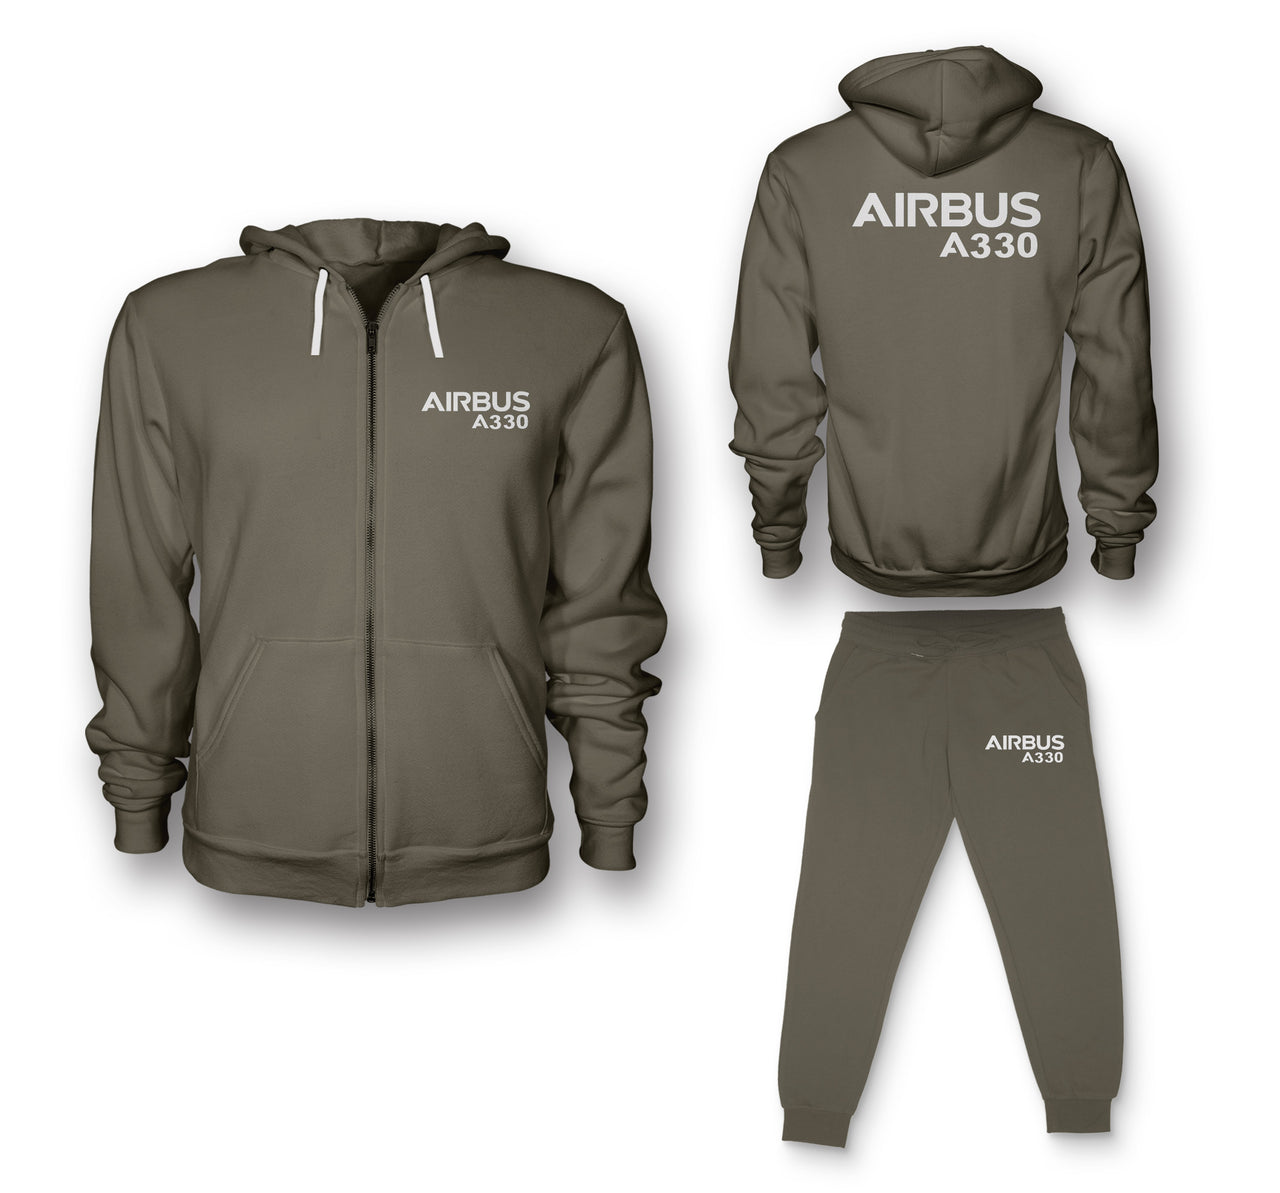 Airbus A330 & Text Designed Zipped Hoodies & Sweatpants Set